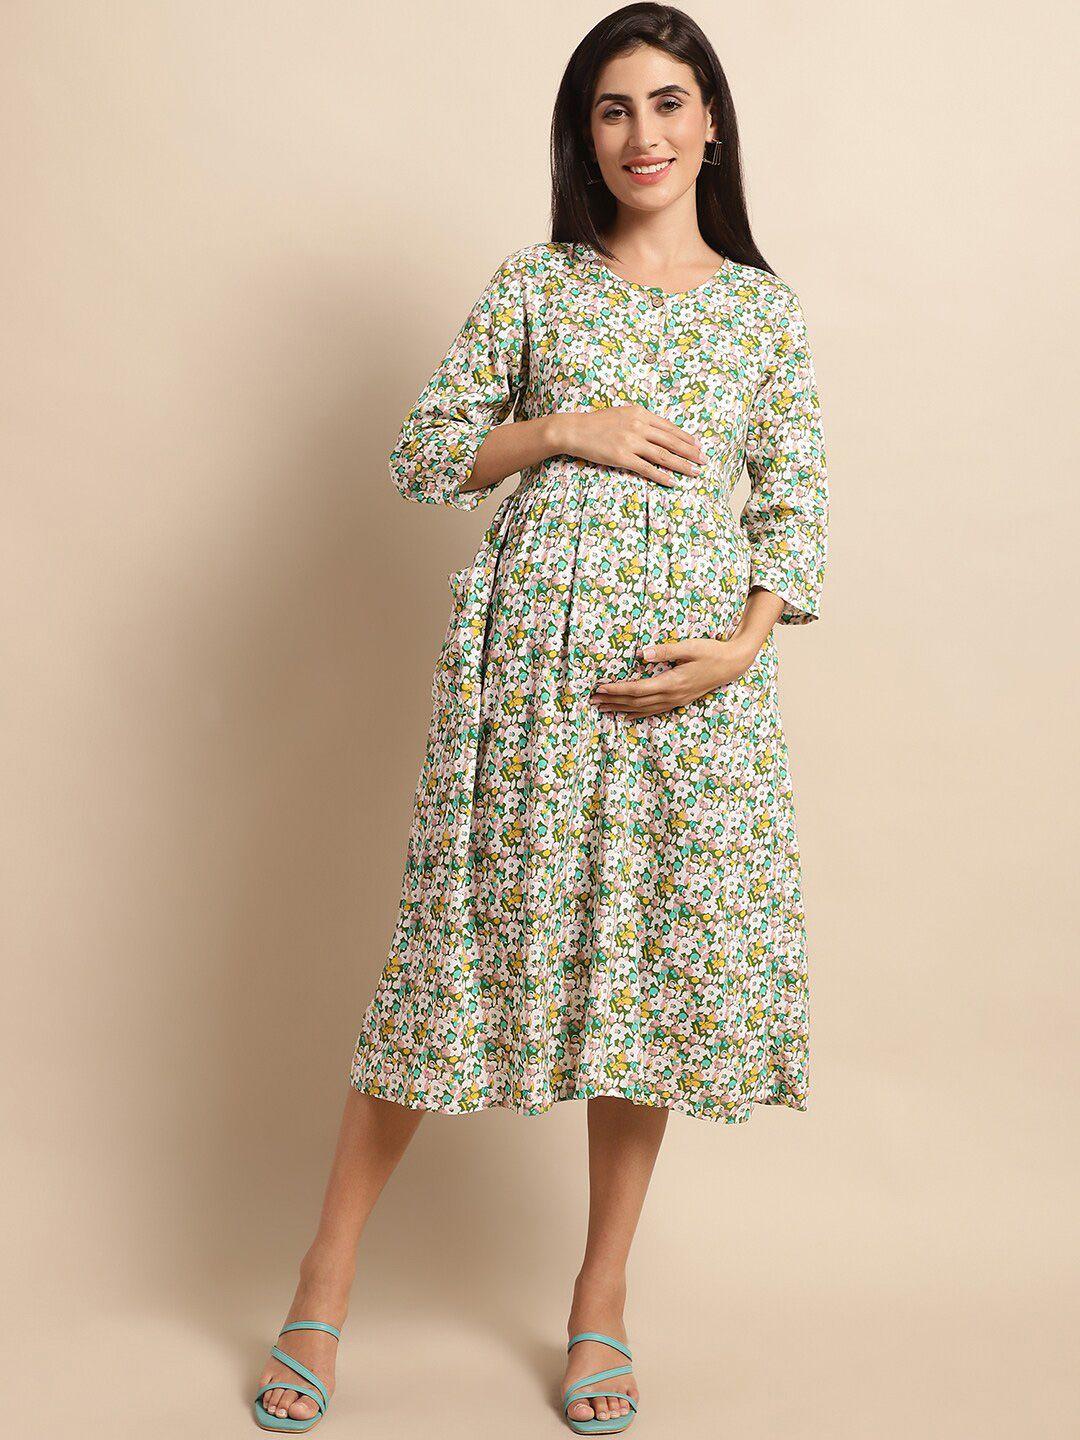 frempy green floral print maternity fit & flare midi dress